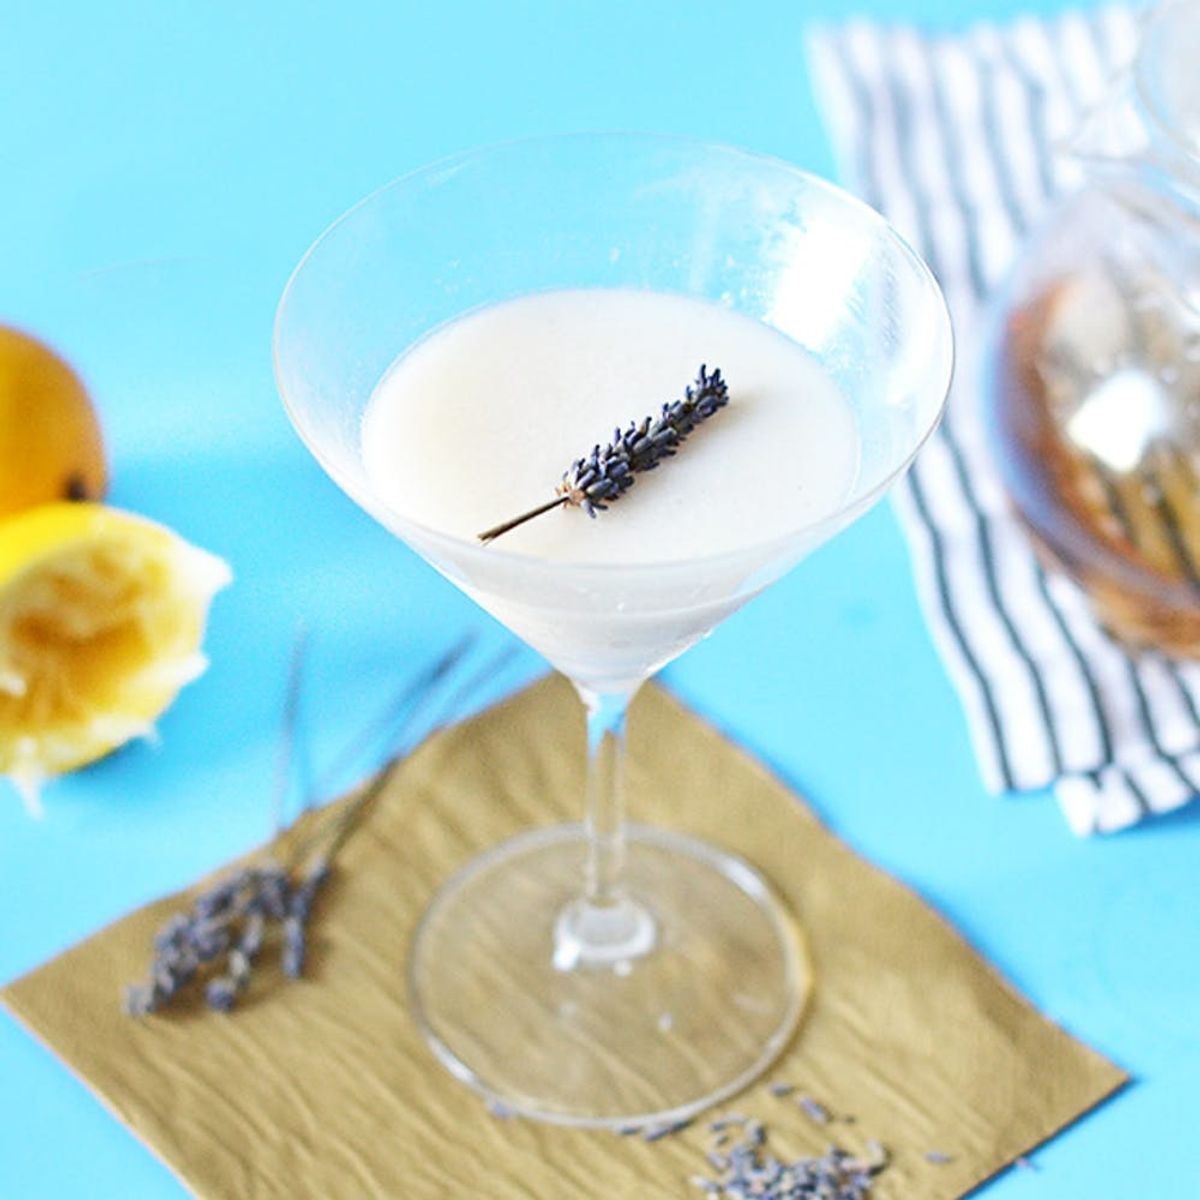 Lemon Lavender Cocktail